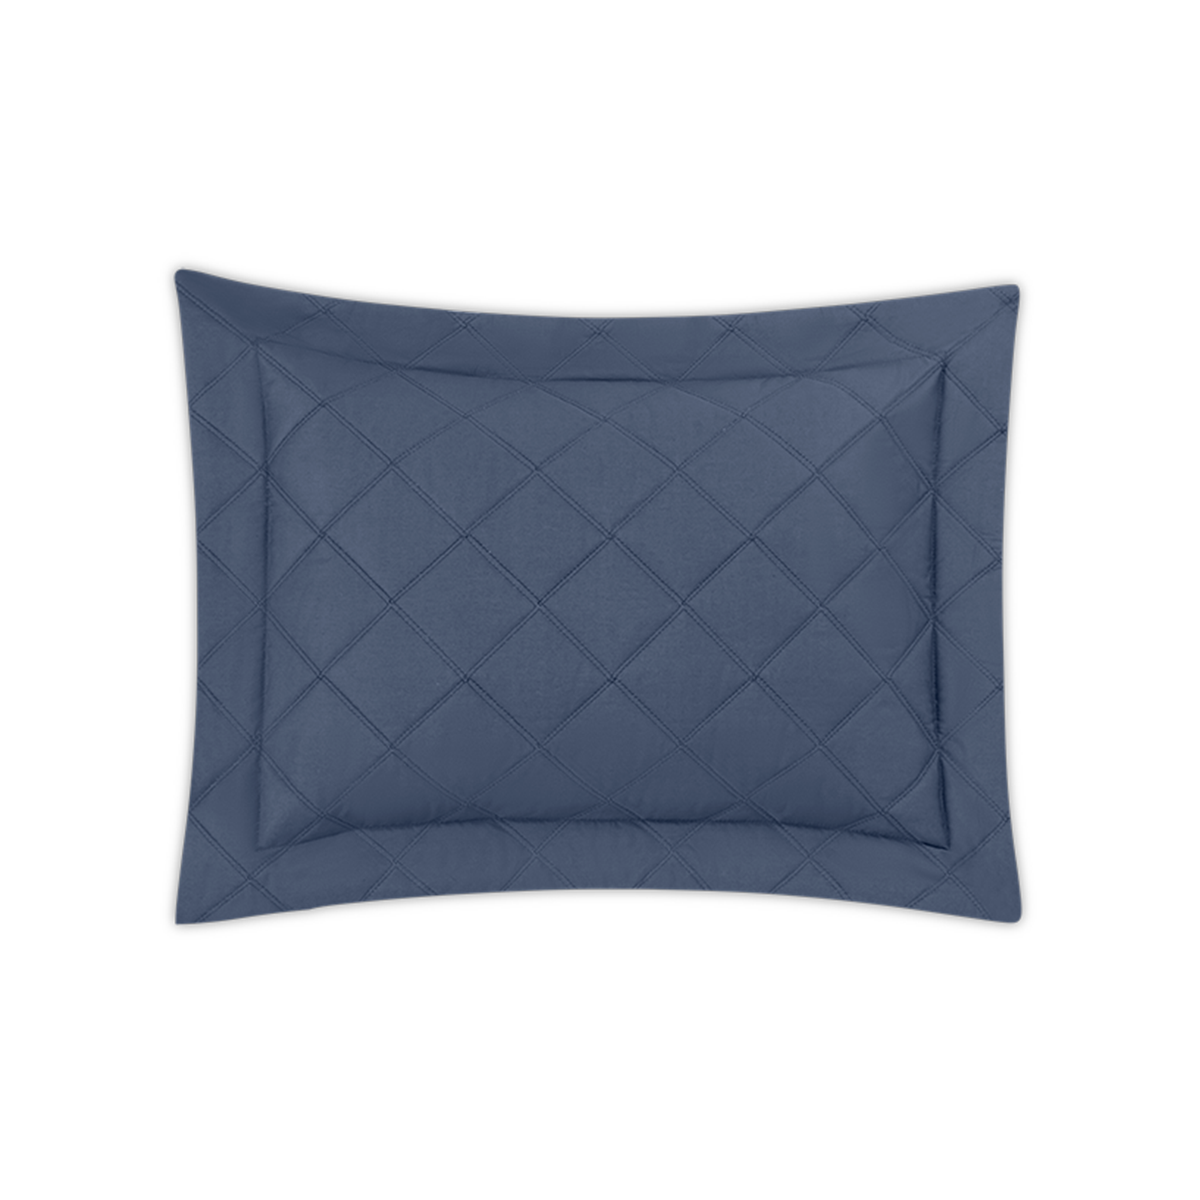 Boudoir Sham of Matouk Milano Quilt Bedding in Color Steel Blue